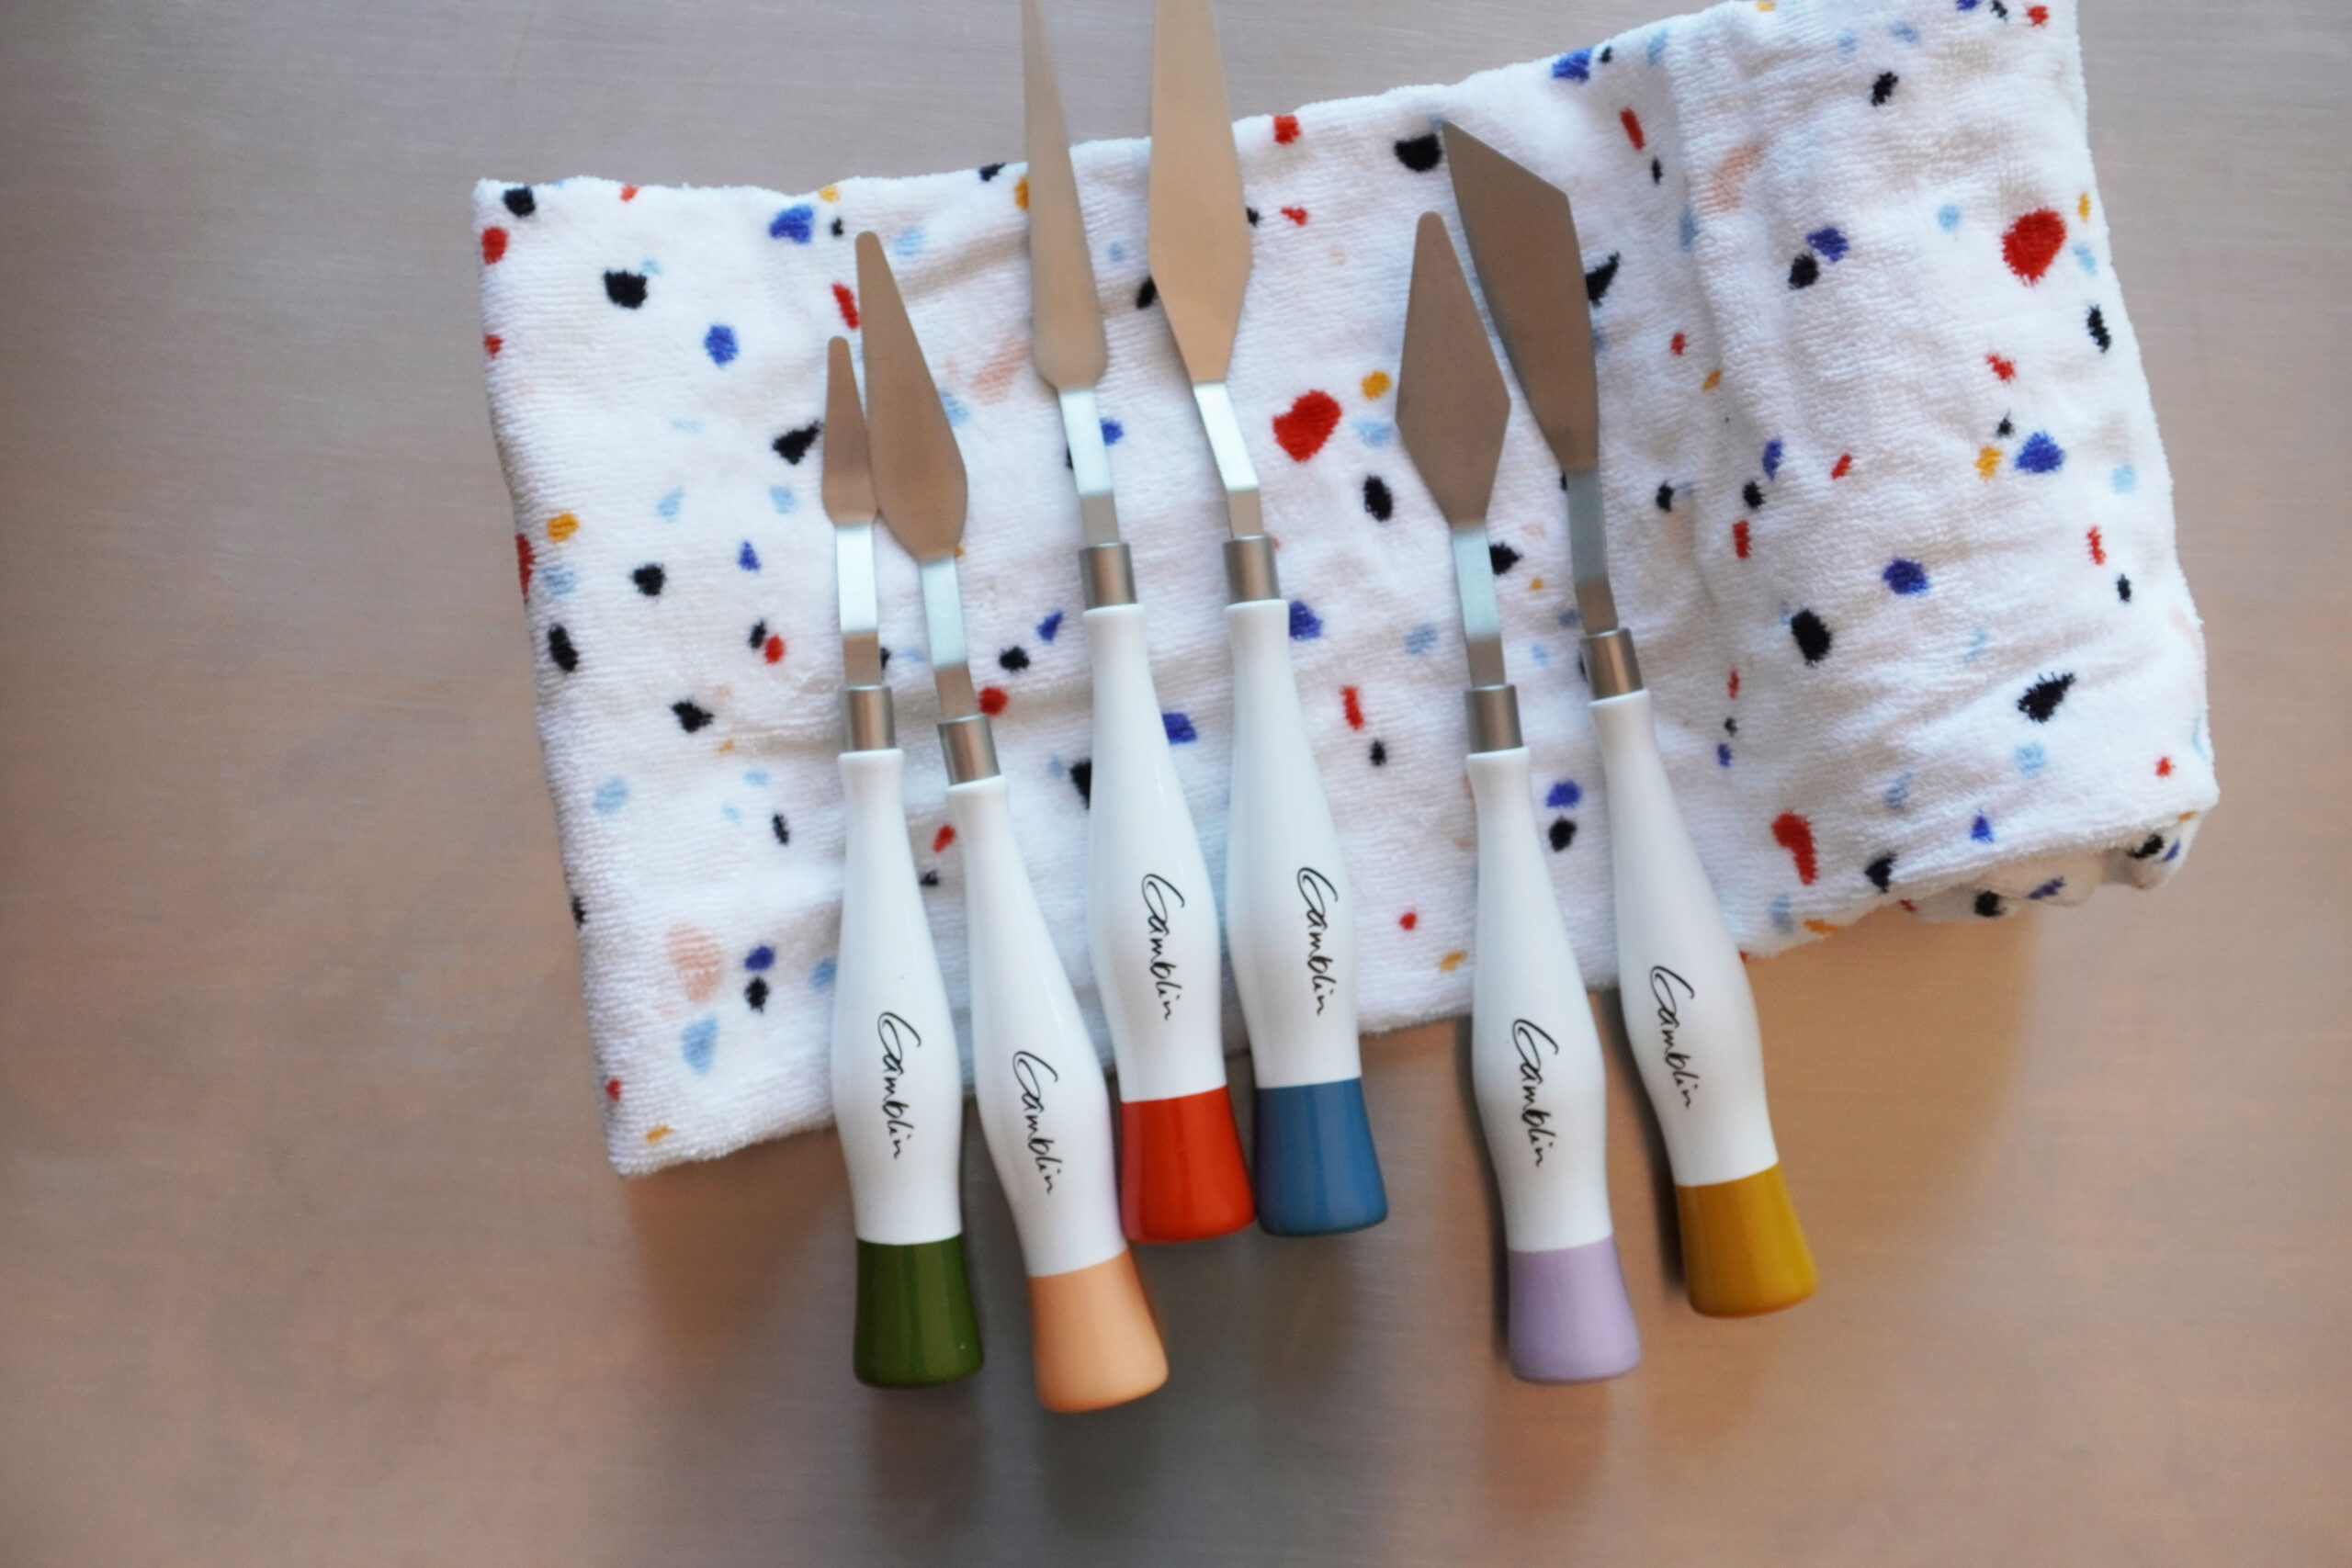 Gamblin palette knives, studio knives on colorful towel